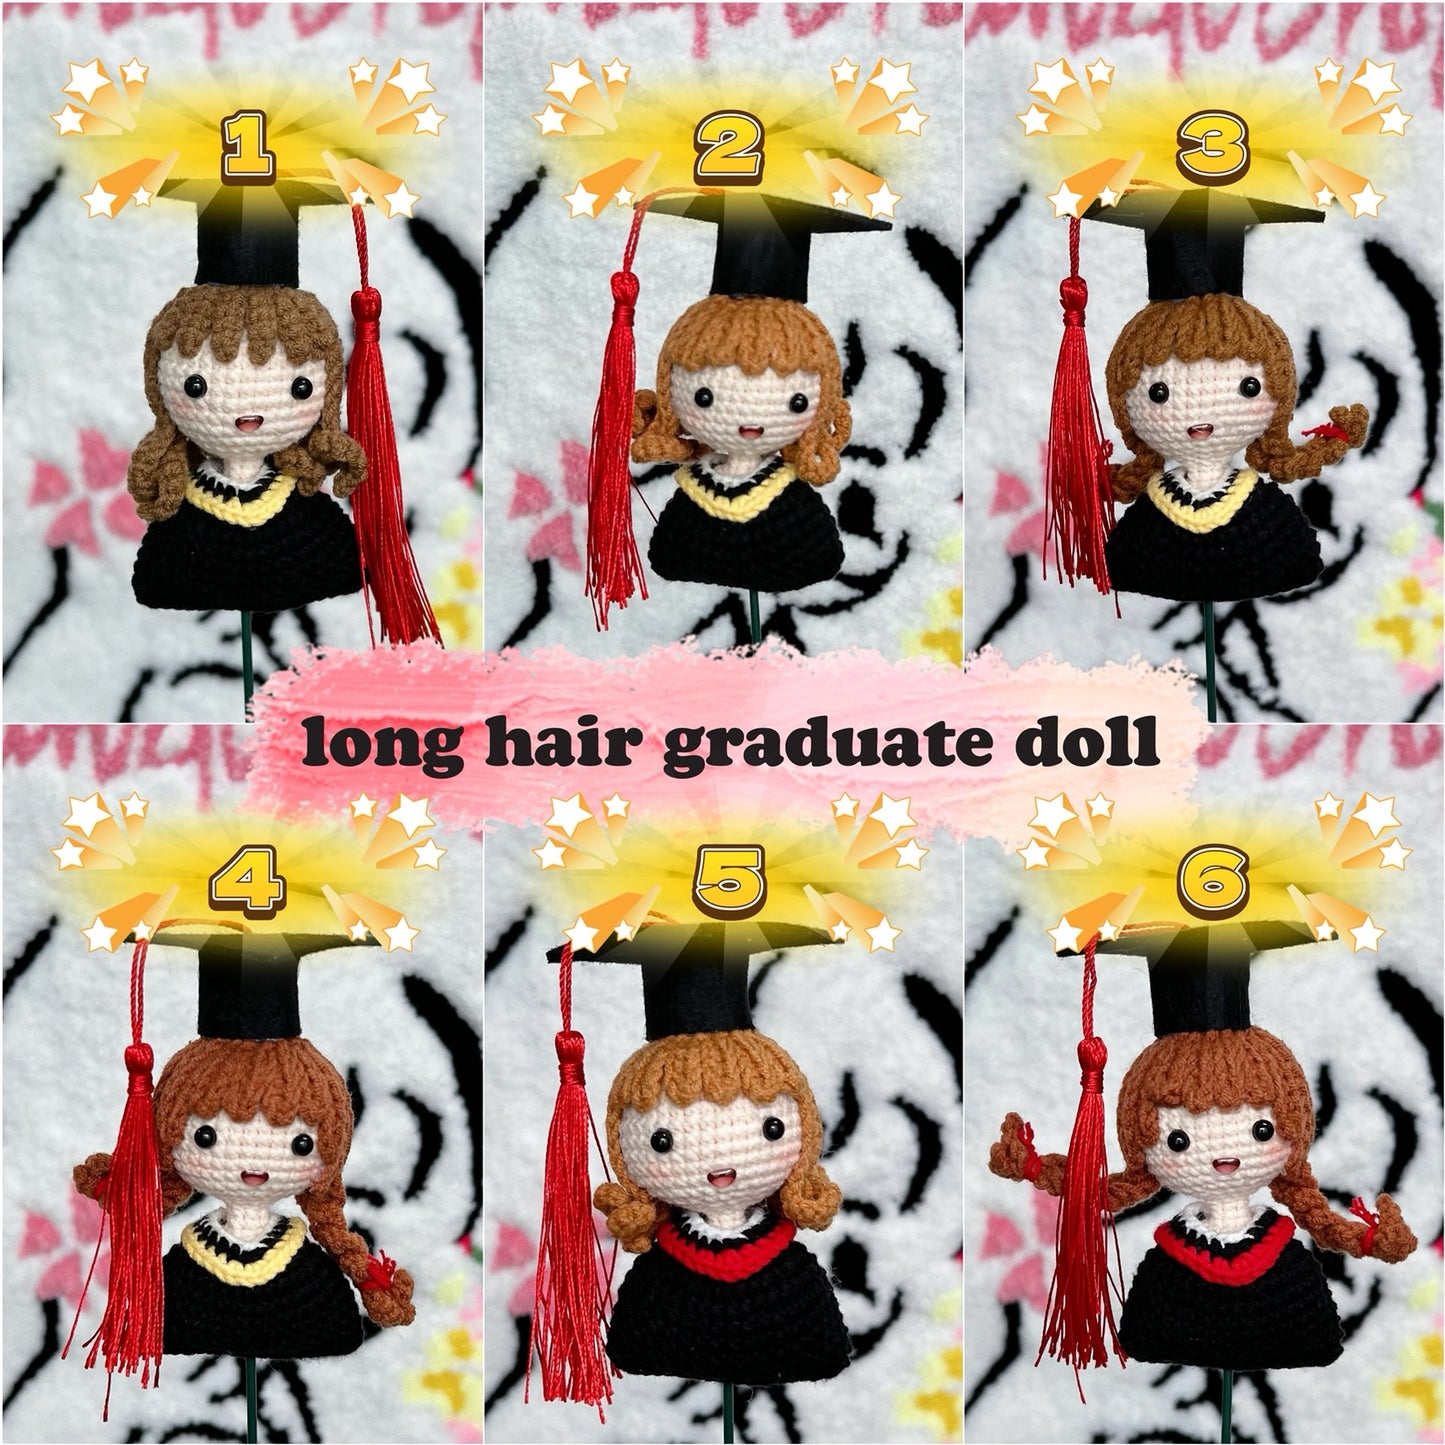 crochet graduate doll - long hair girl 🎓✧˖°